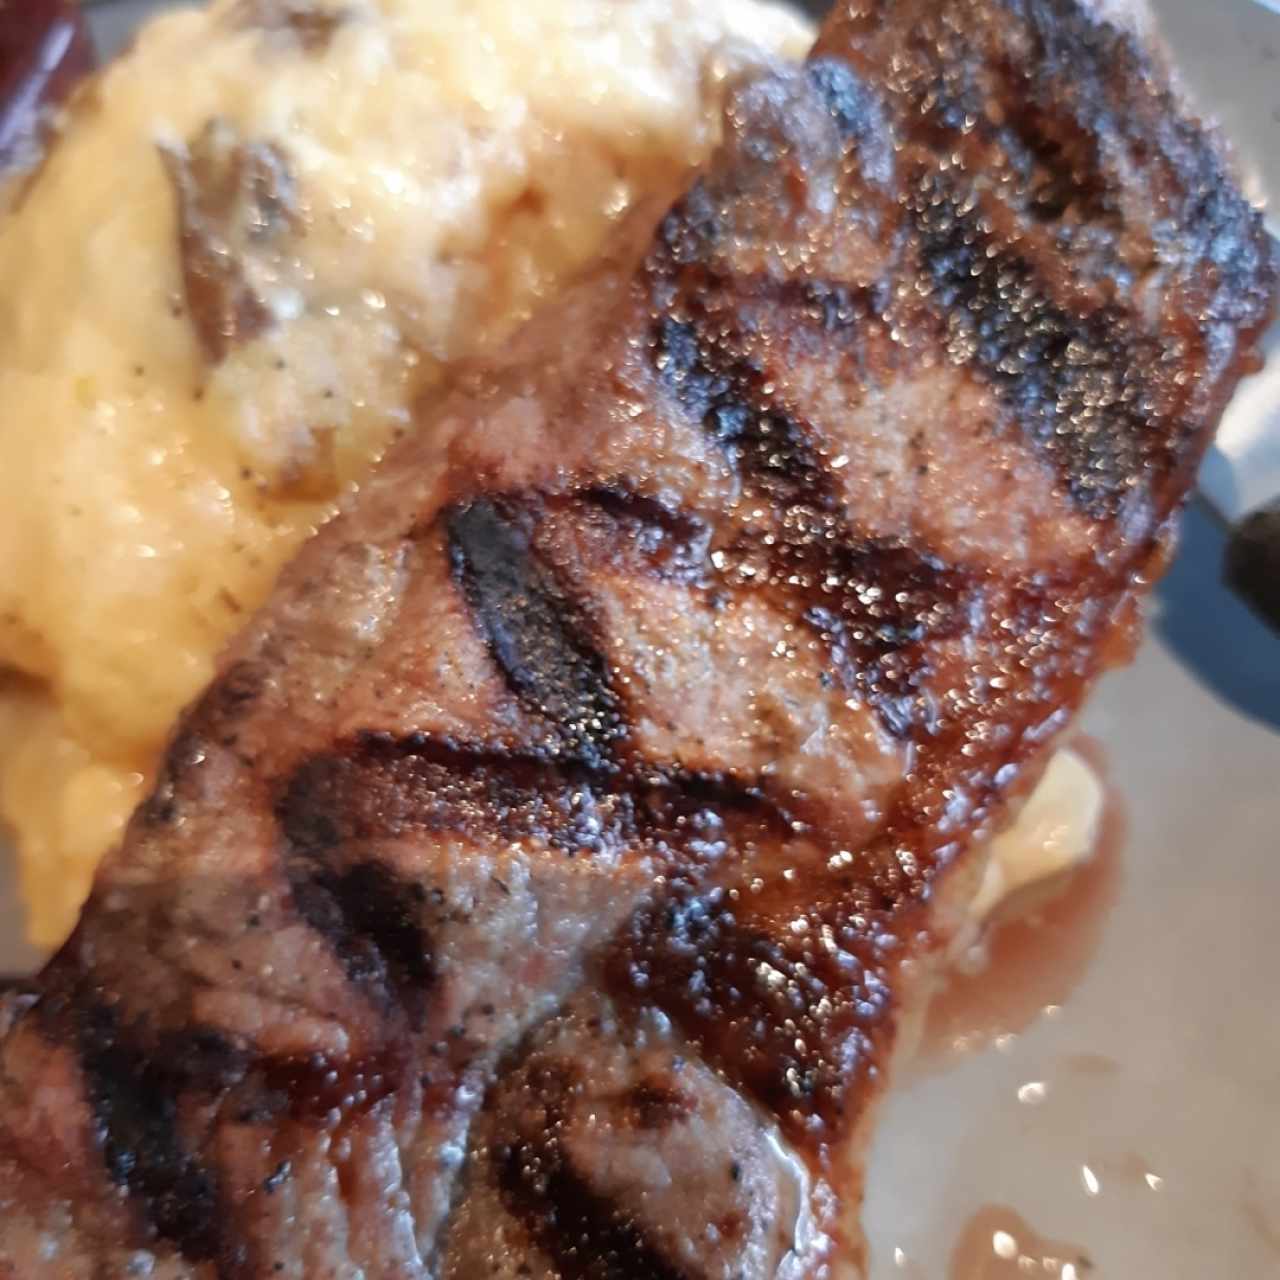 Carnes - House Steak